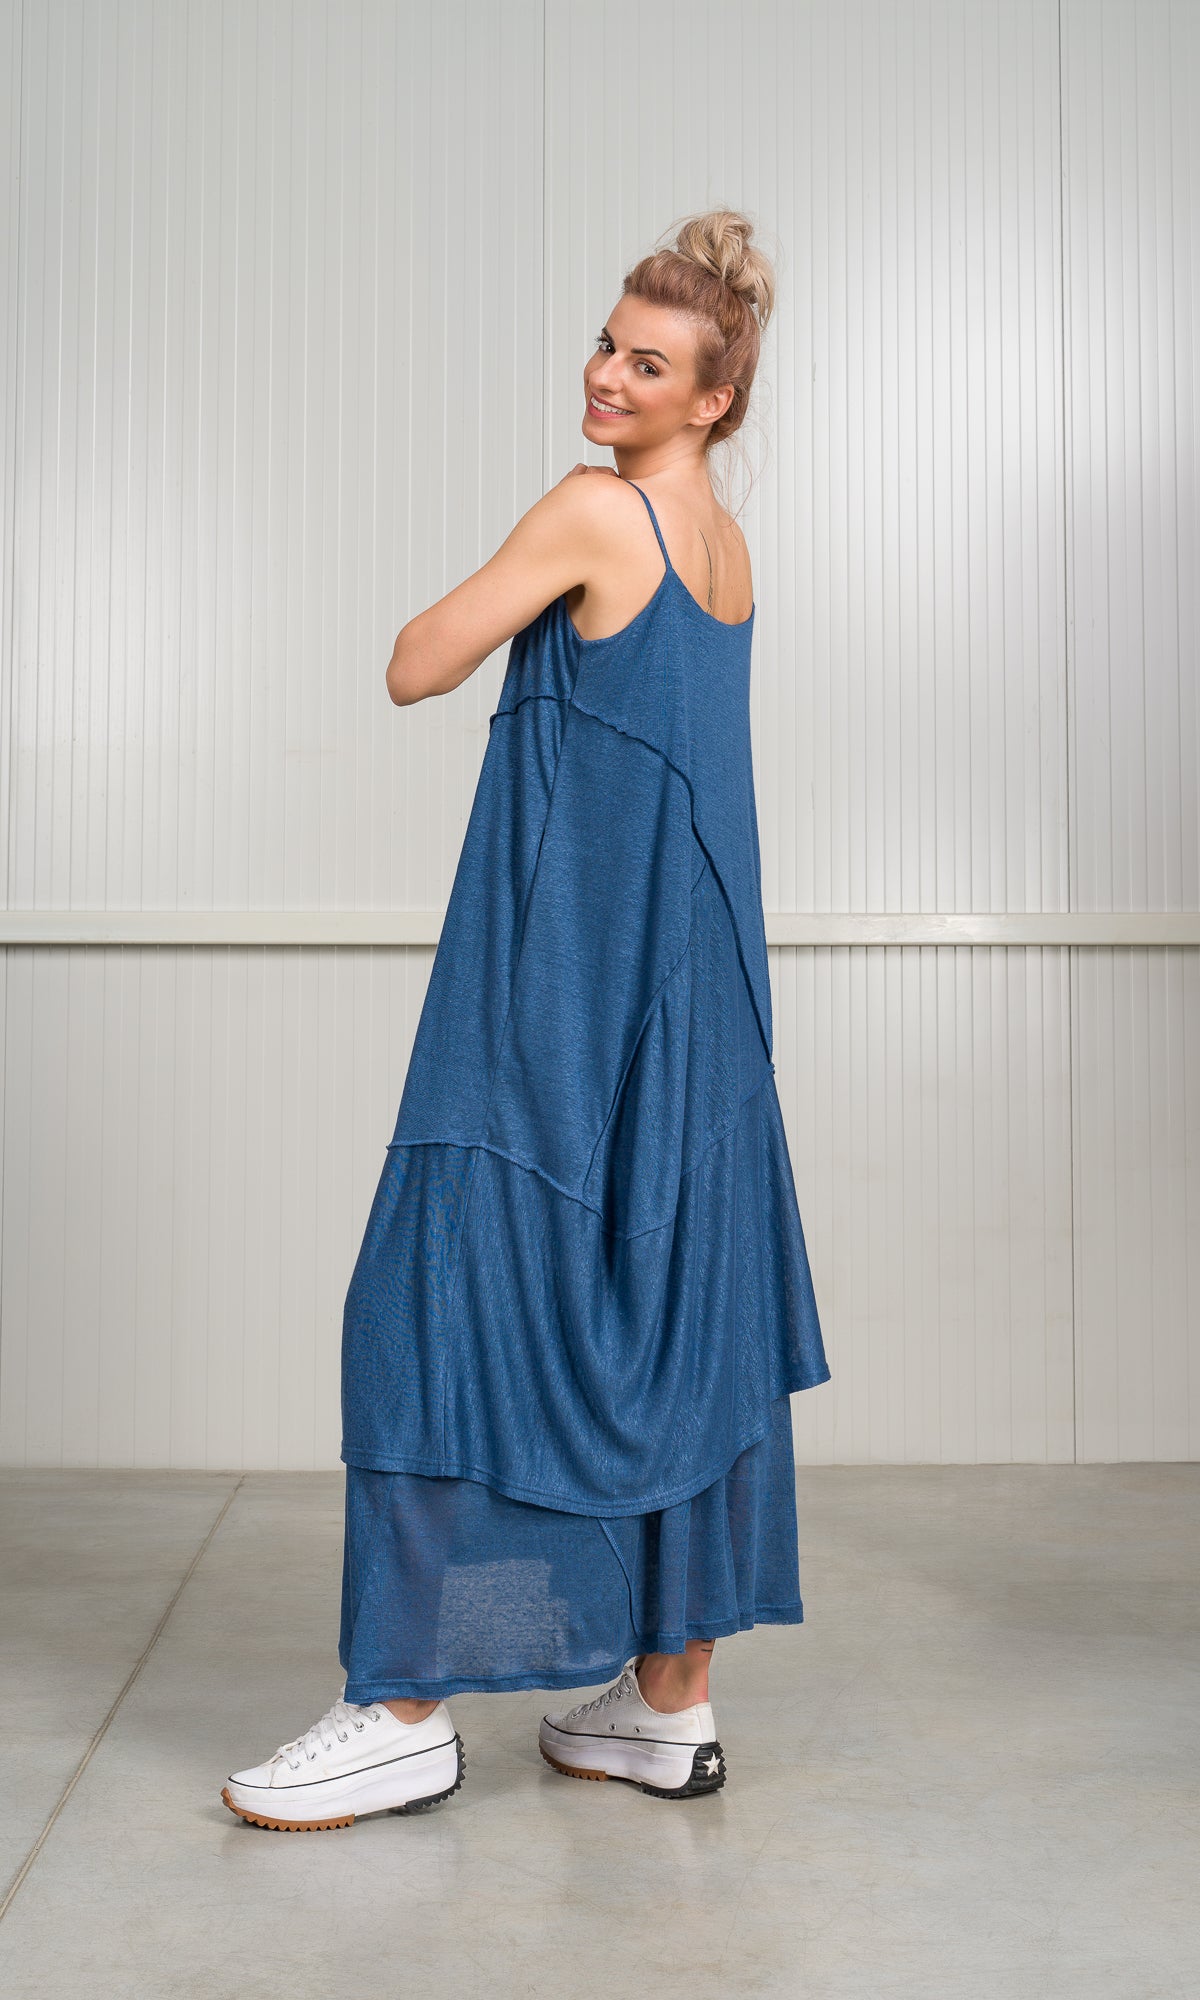 Linen Knit Dress with Seam Details